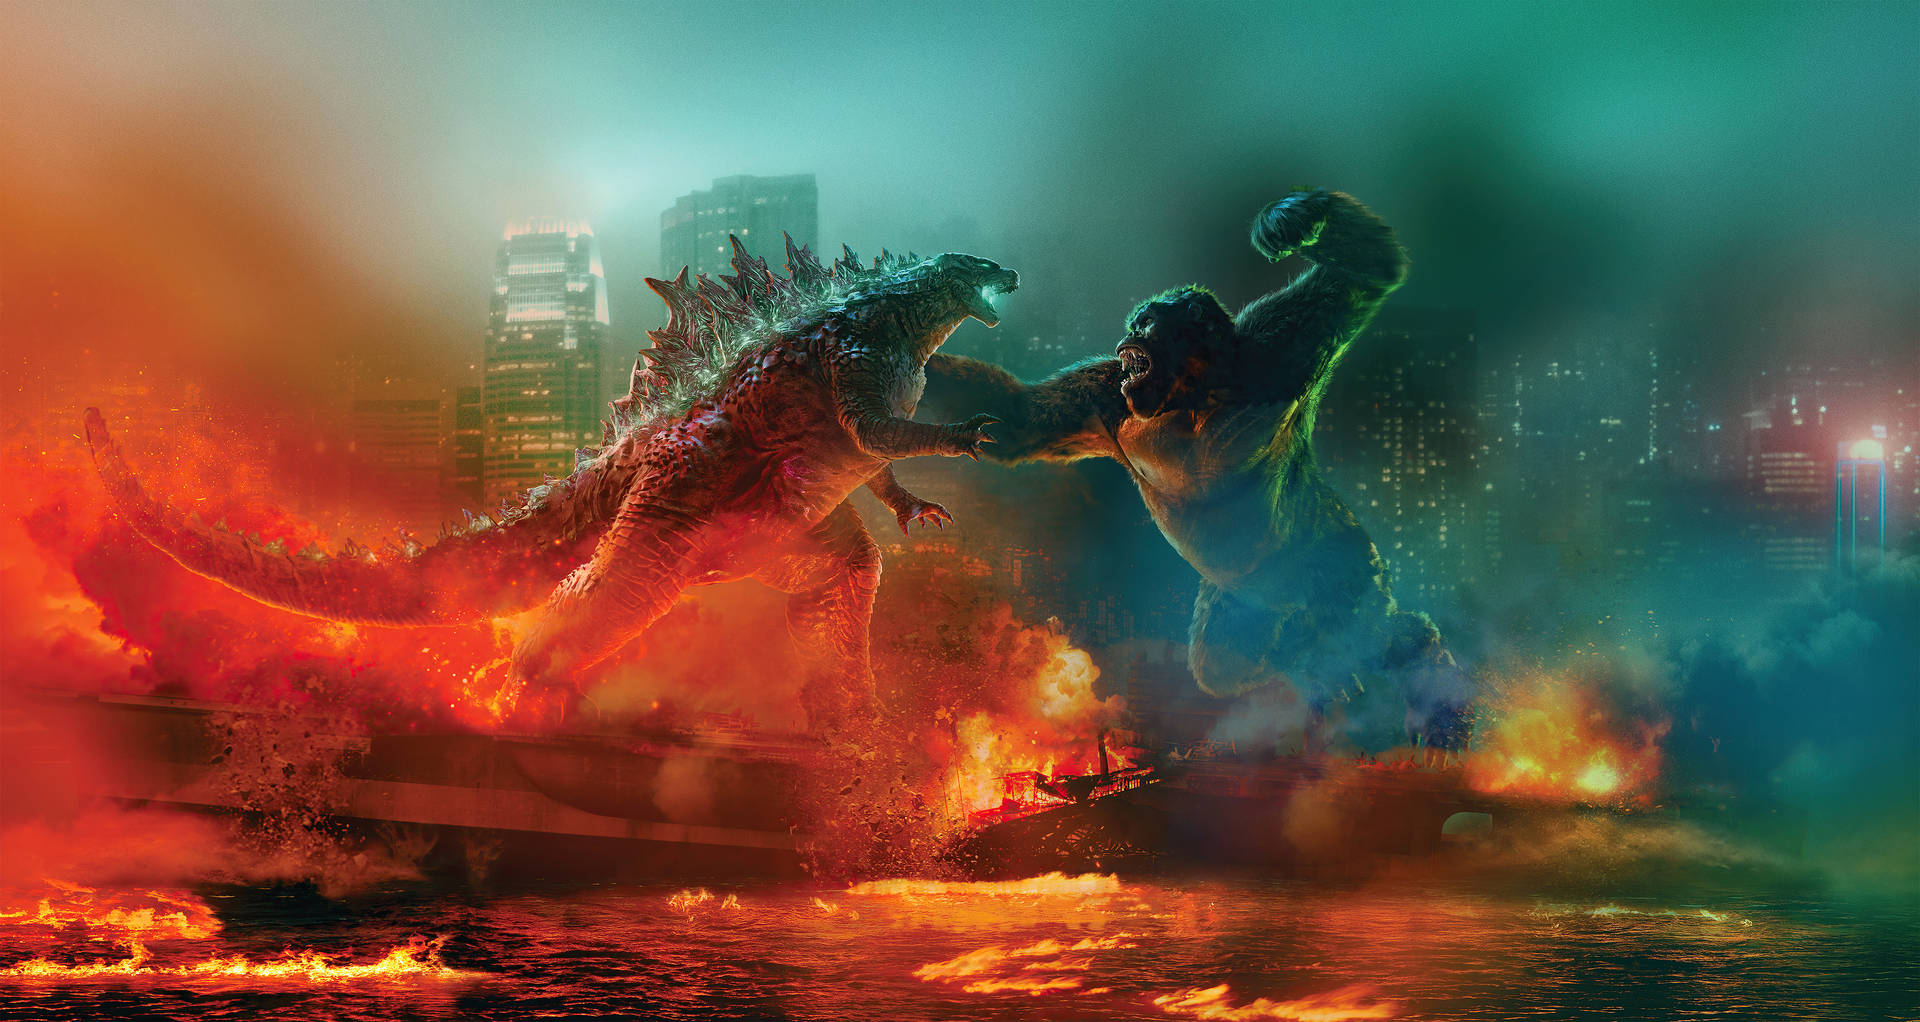 Godzillamot King Kong Hd Bakgrundsbild. Wallpaper